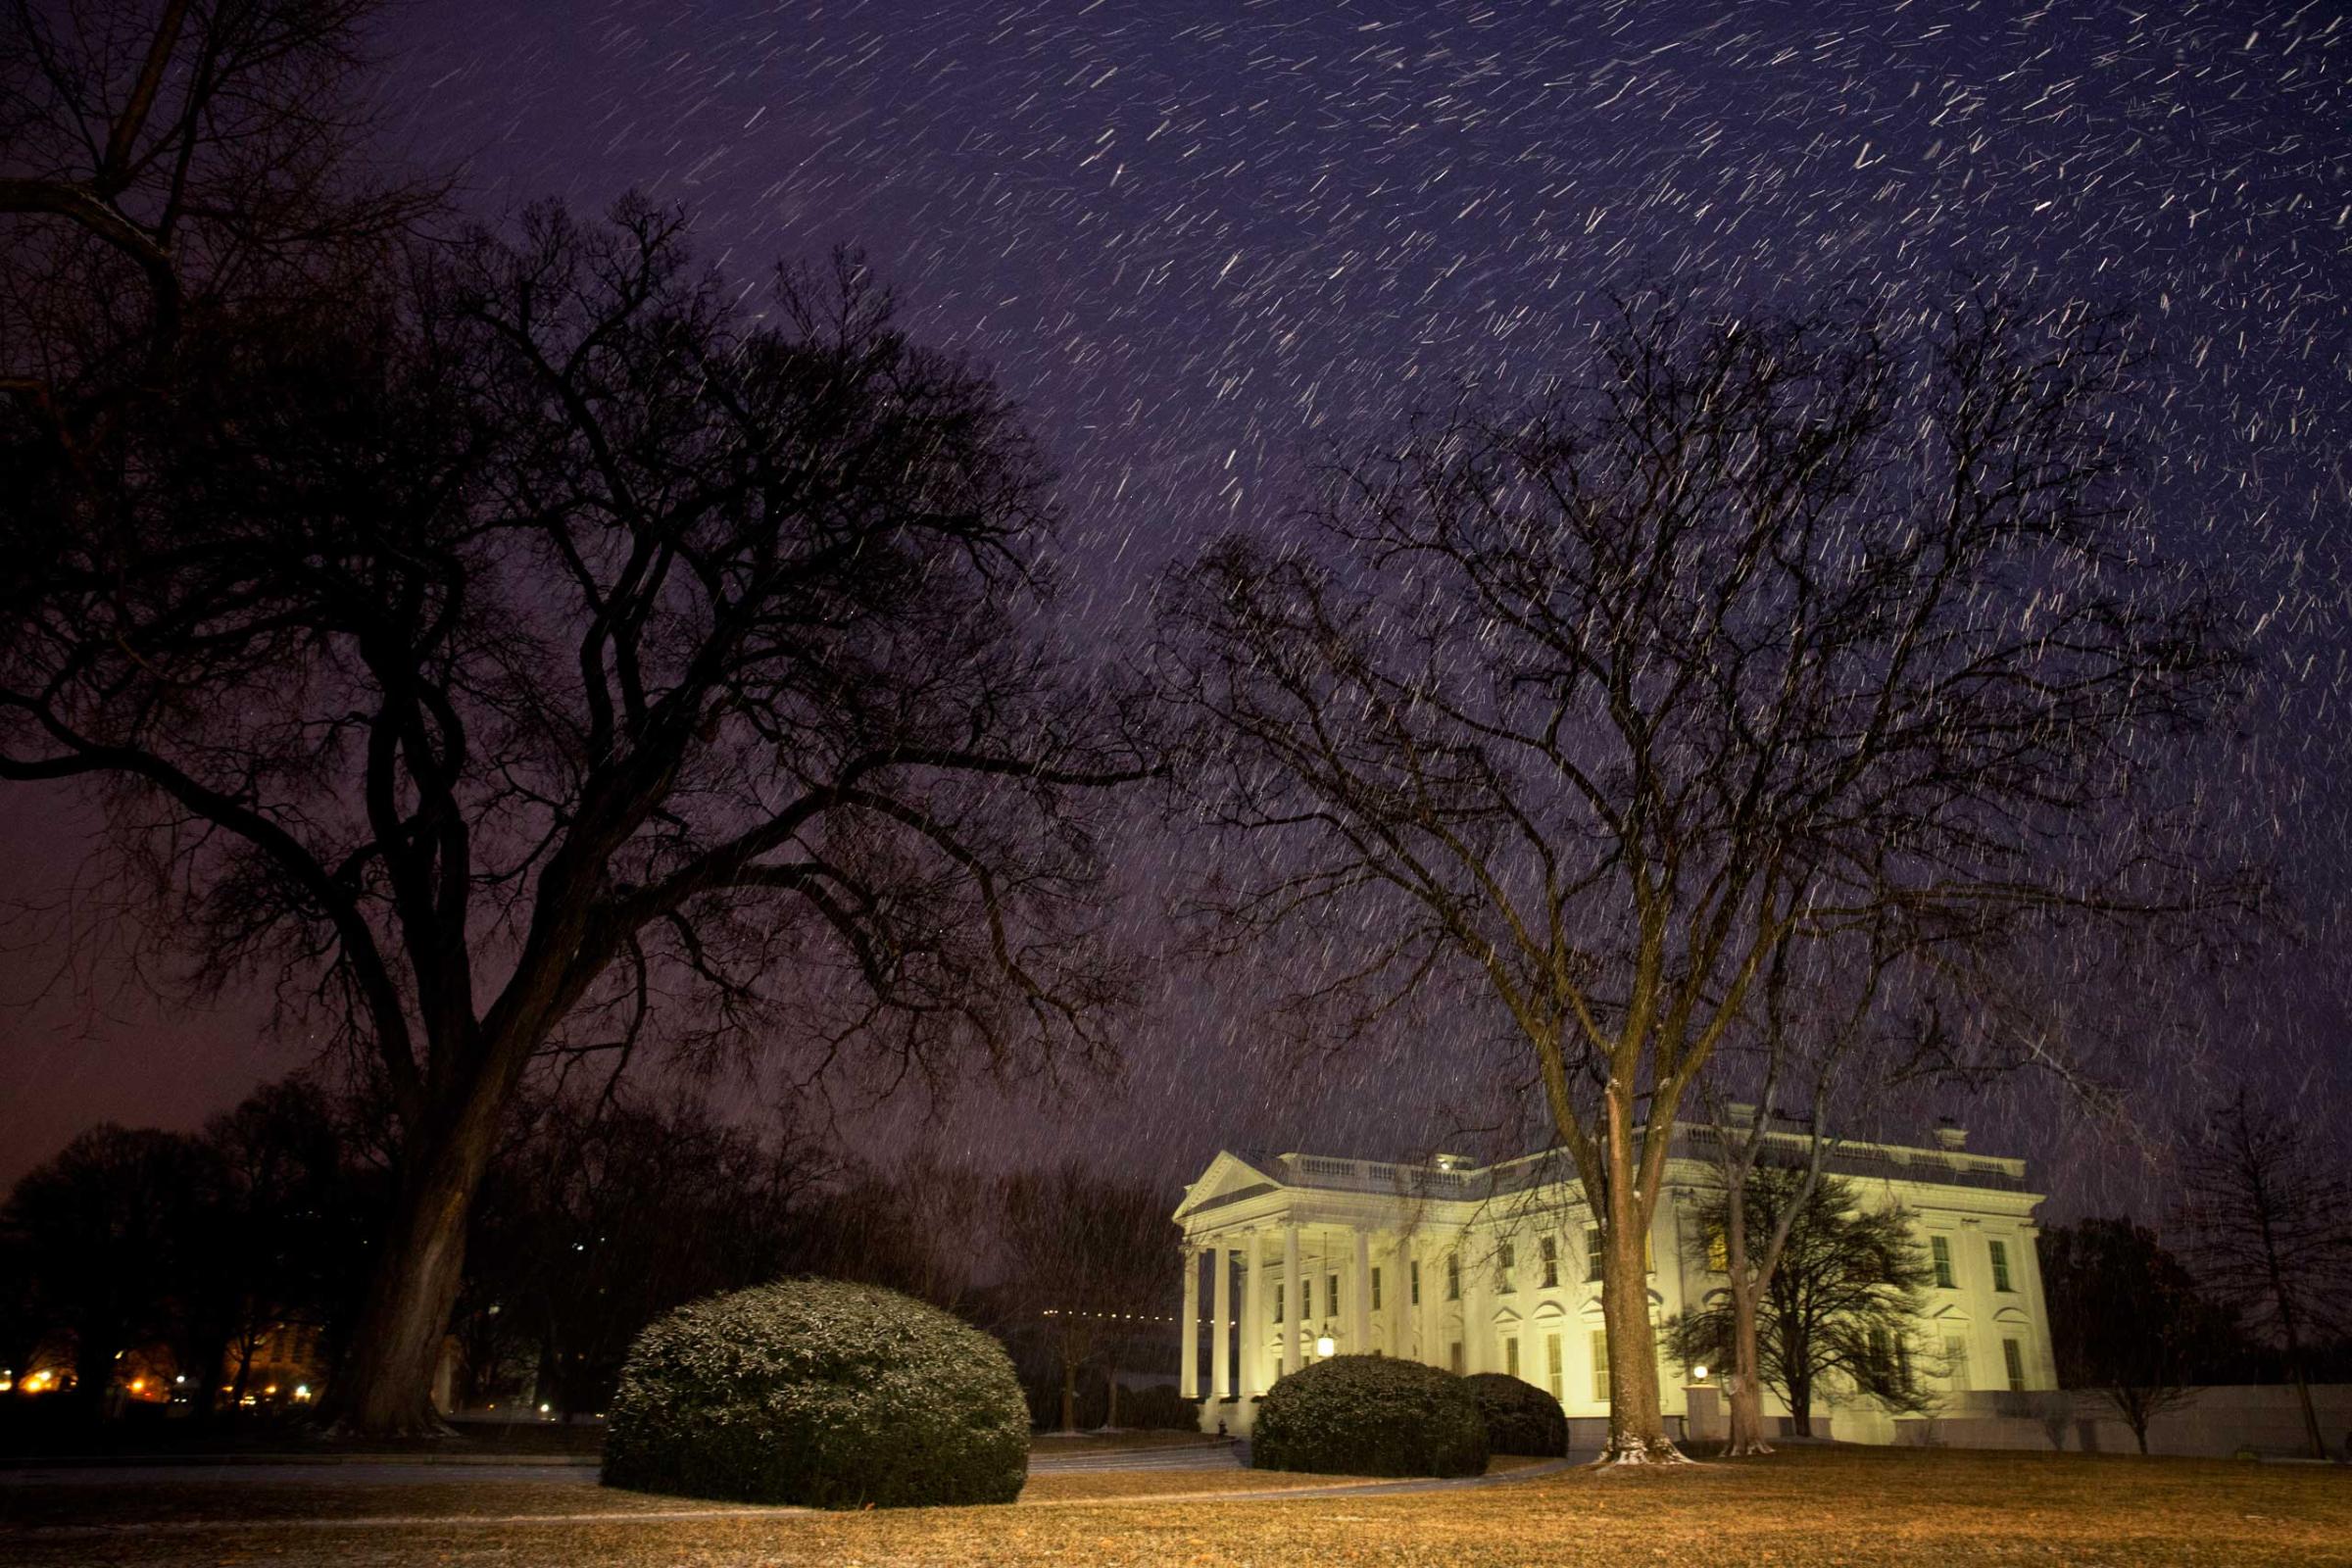 Washington DC Snow Storm Winter Weather